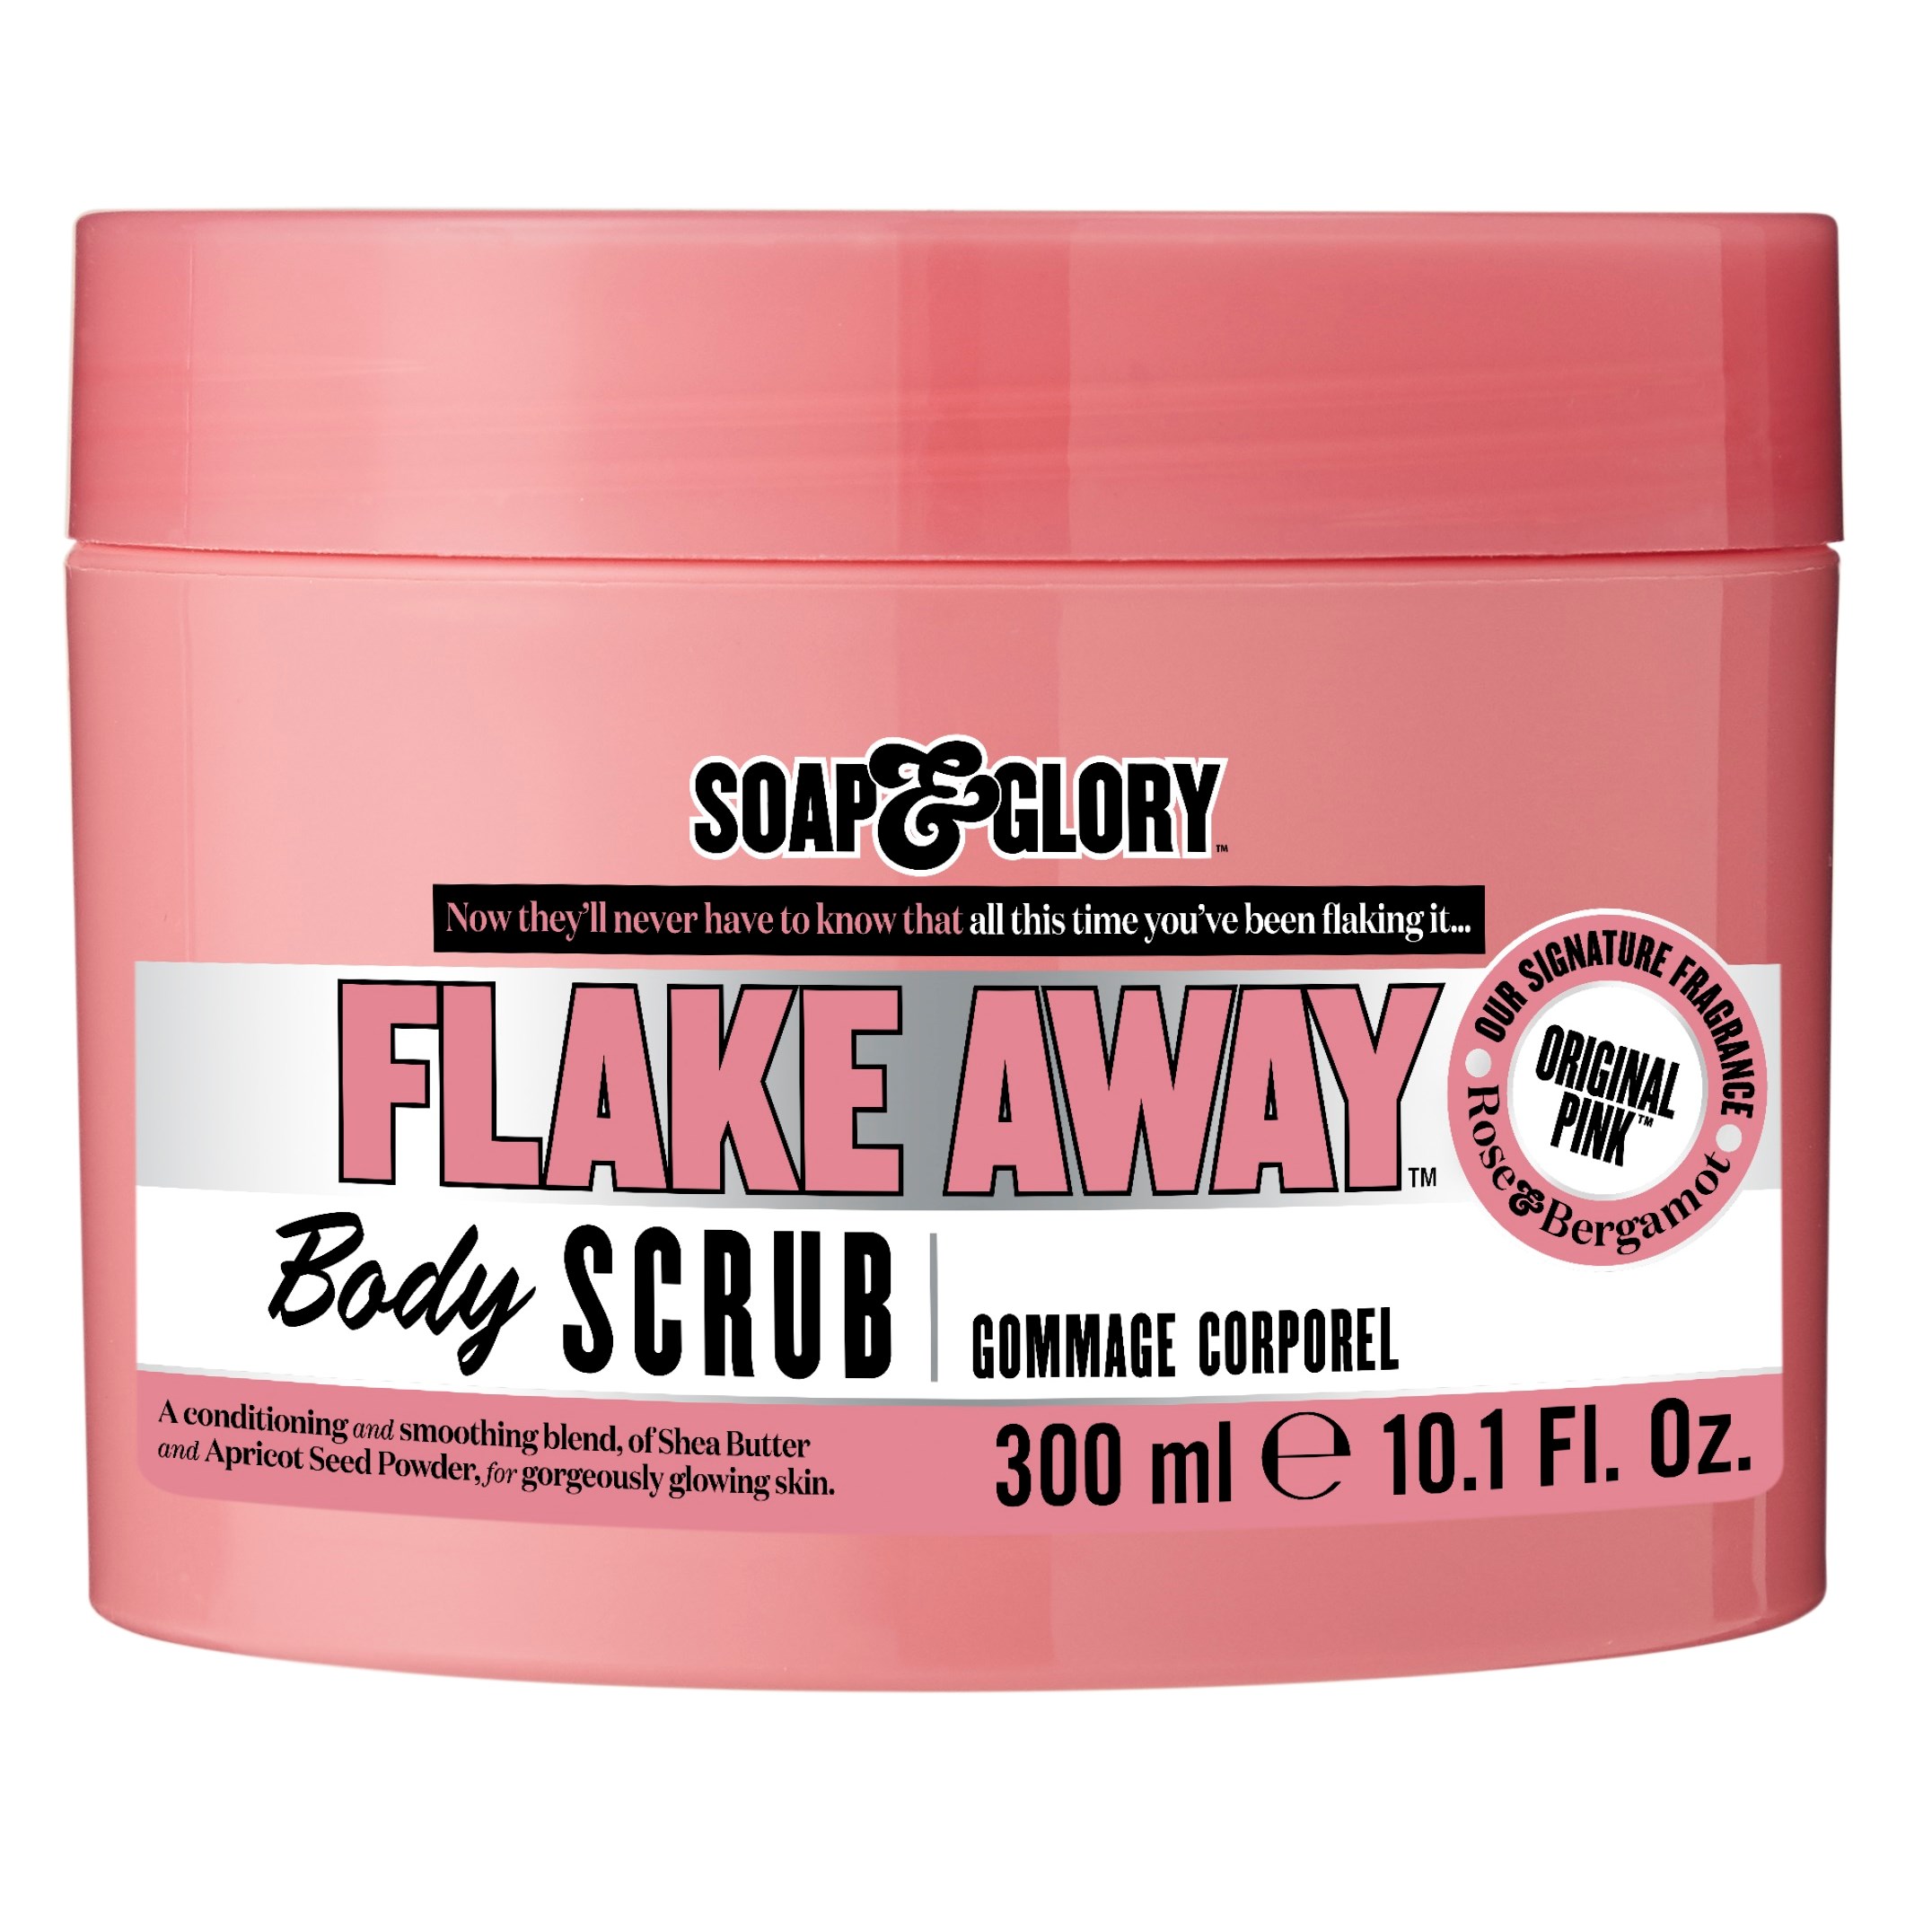 Bilde av Soap & Glory Original Pink Flake Away Body Scrub 300 Ml